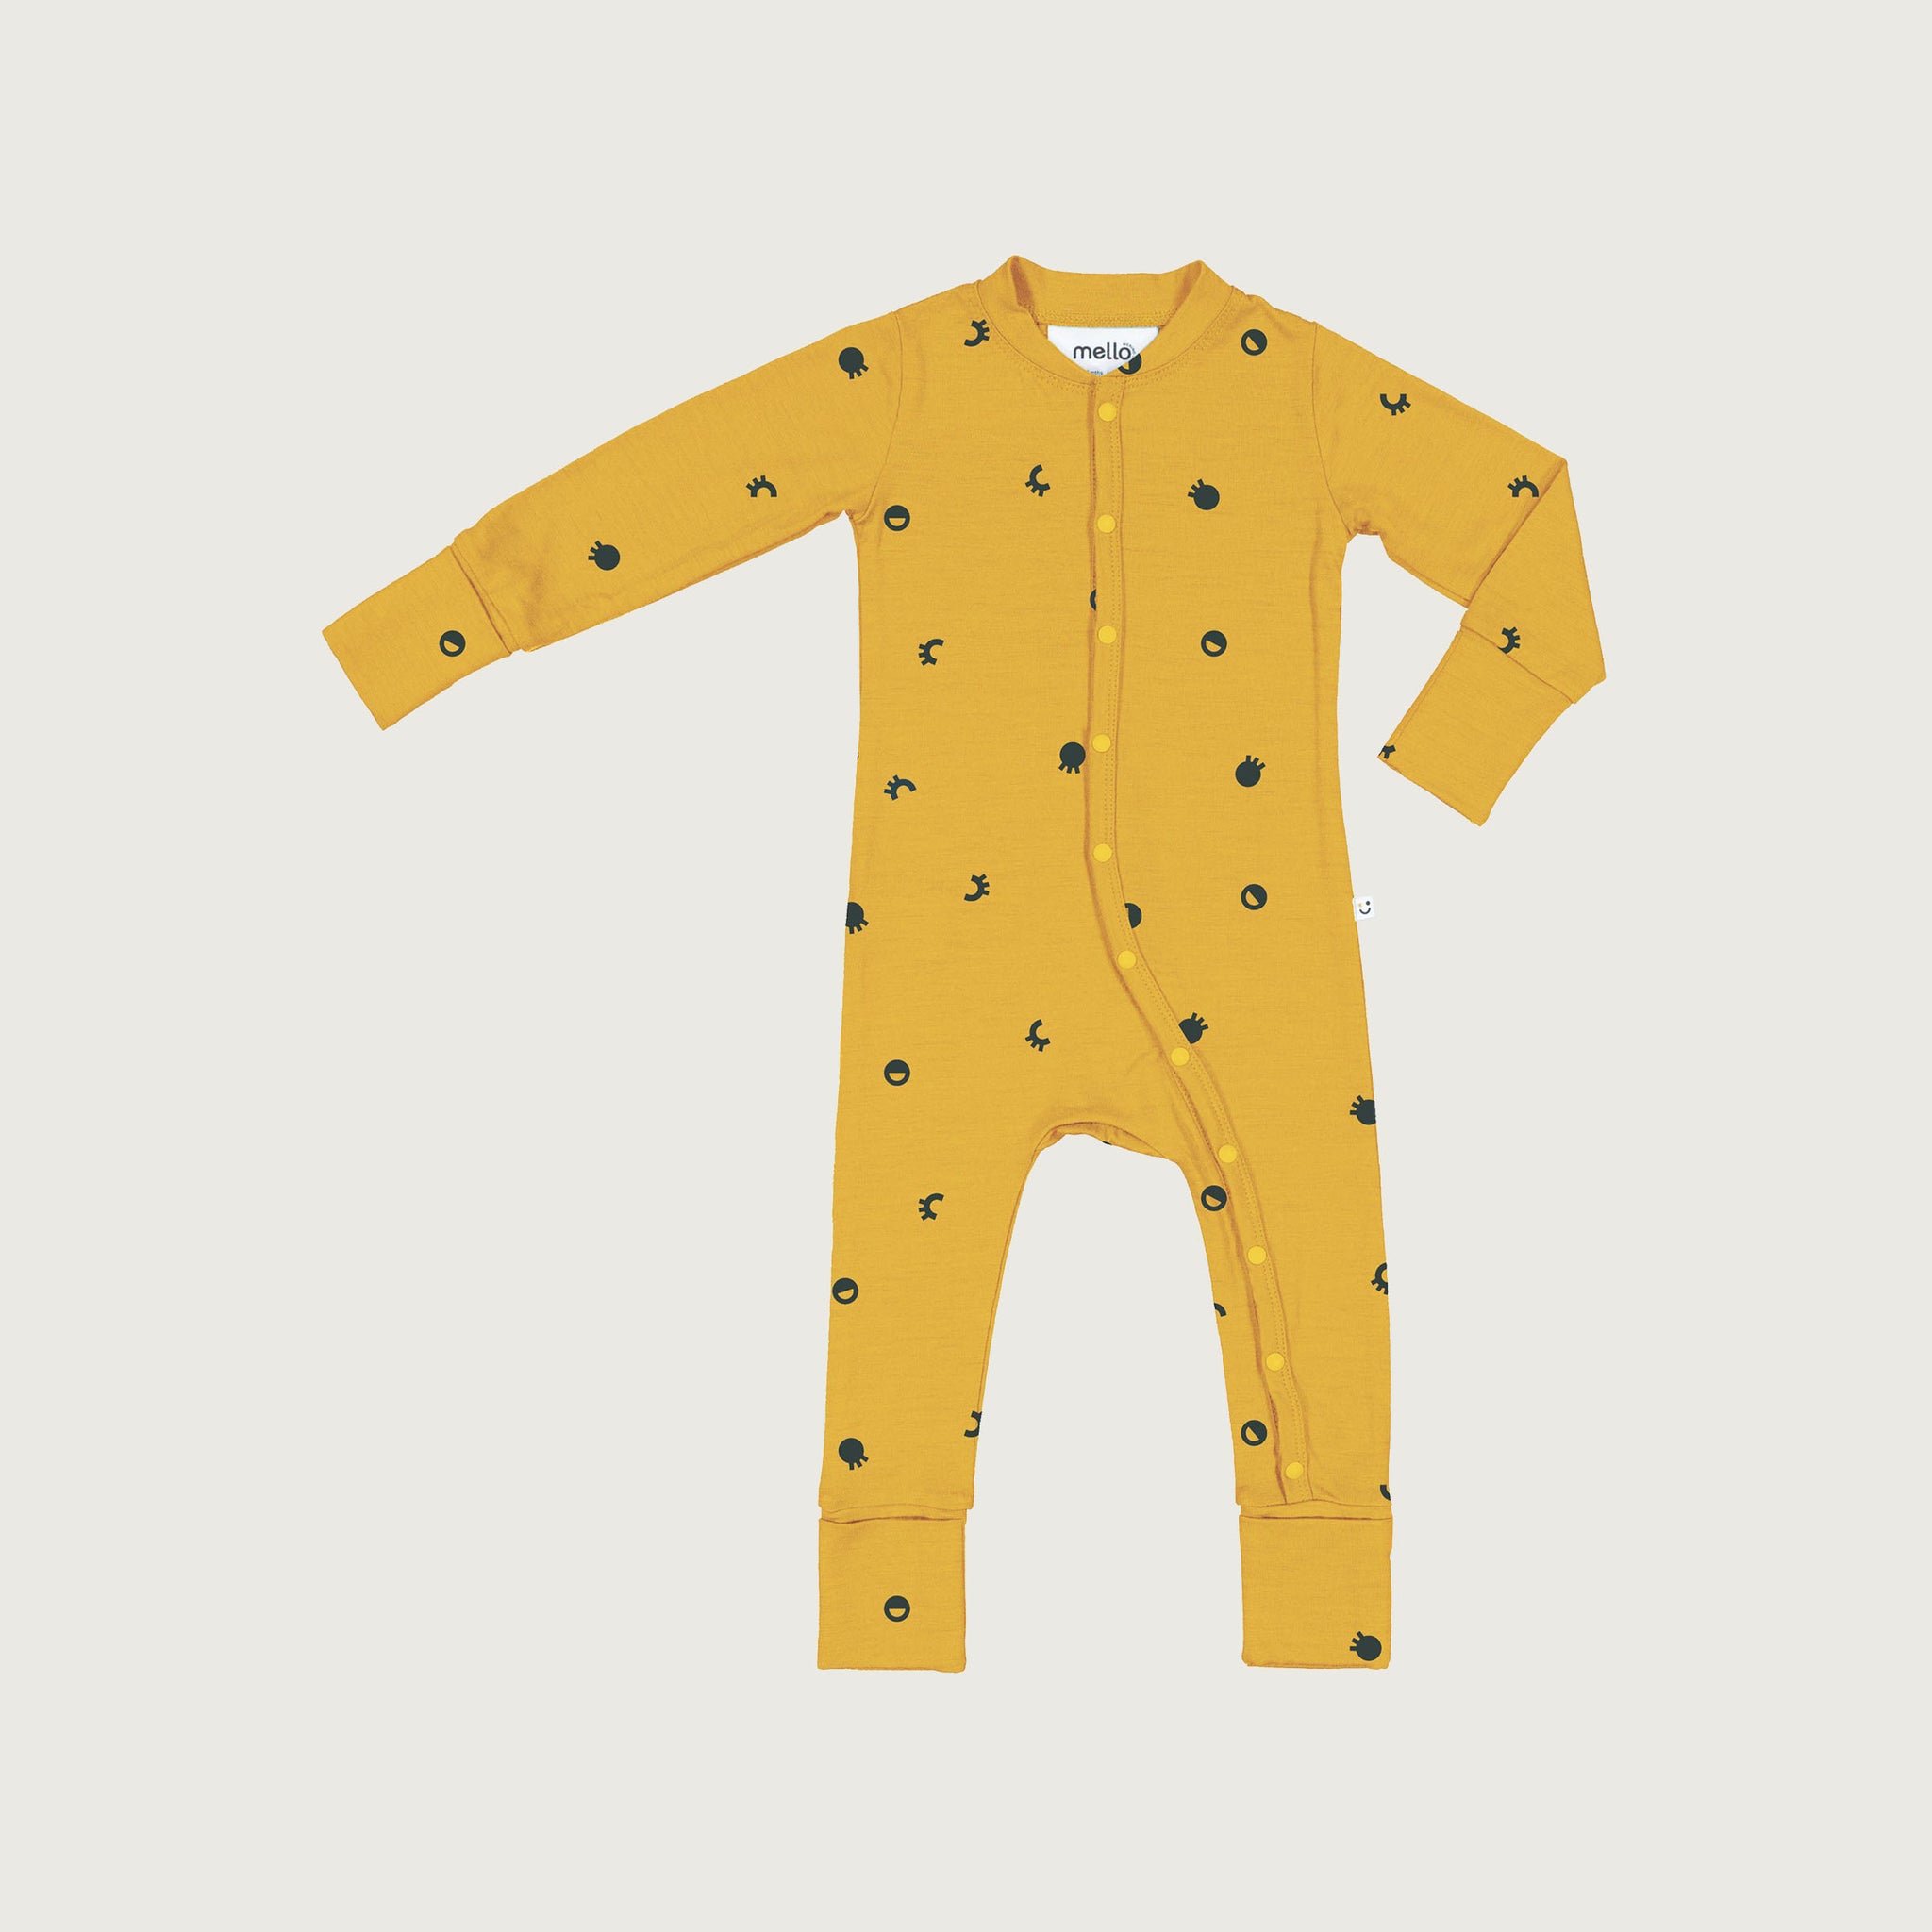 Merino baby sleepsuit canary yellow with print